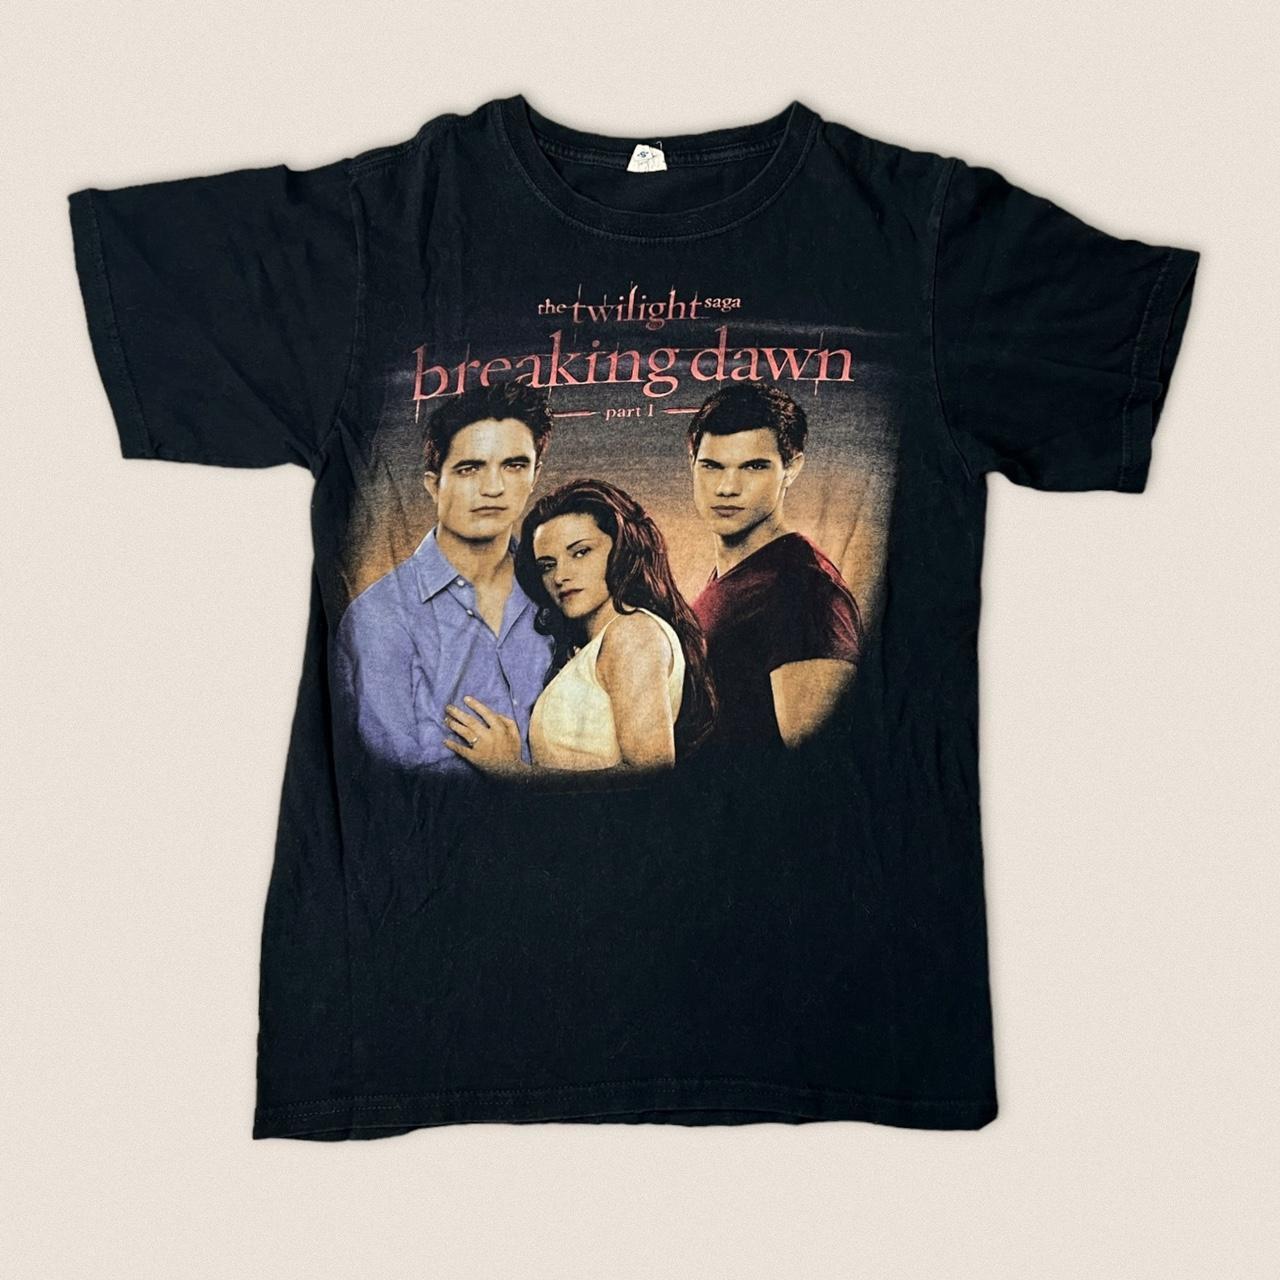 The Twilight Saga T-Shirt with Edward, Jacob, and Bella